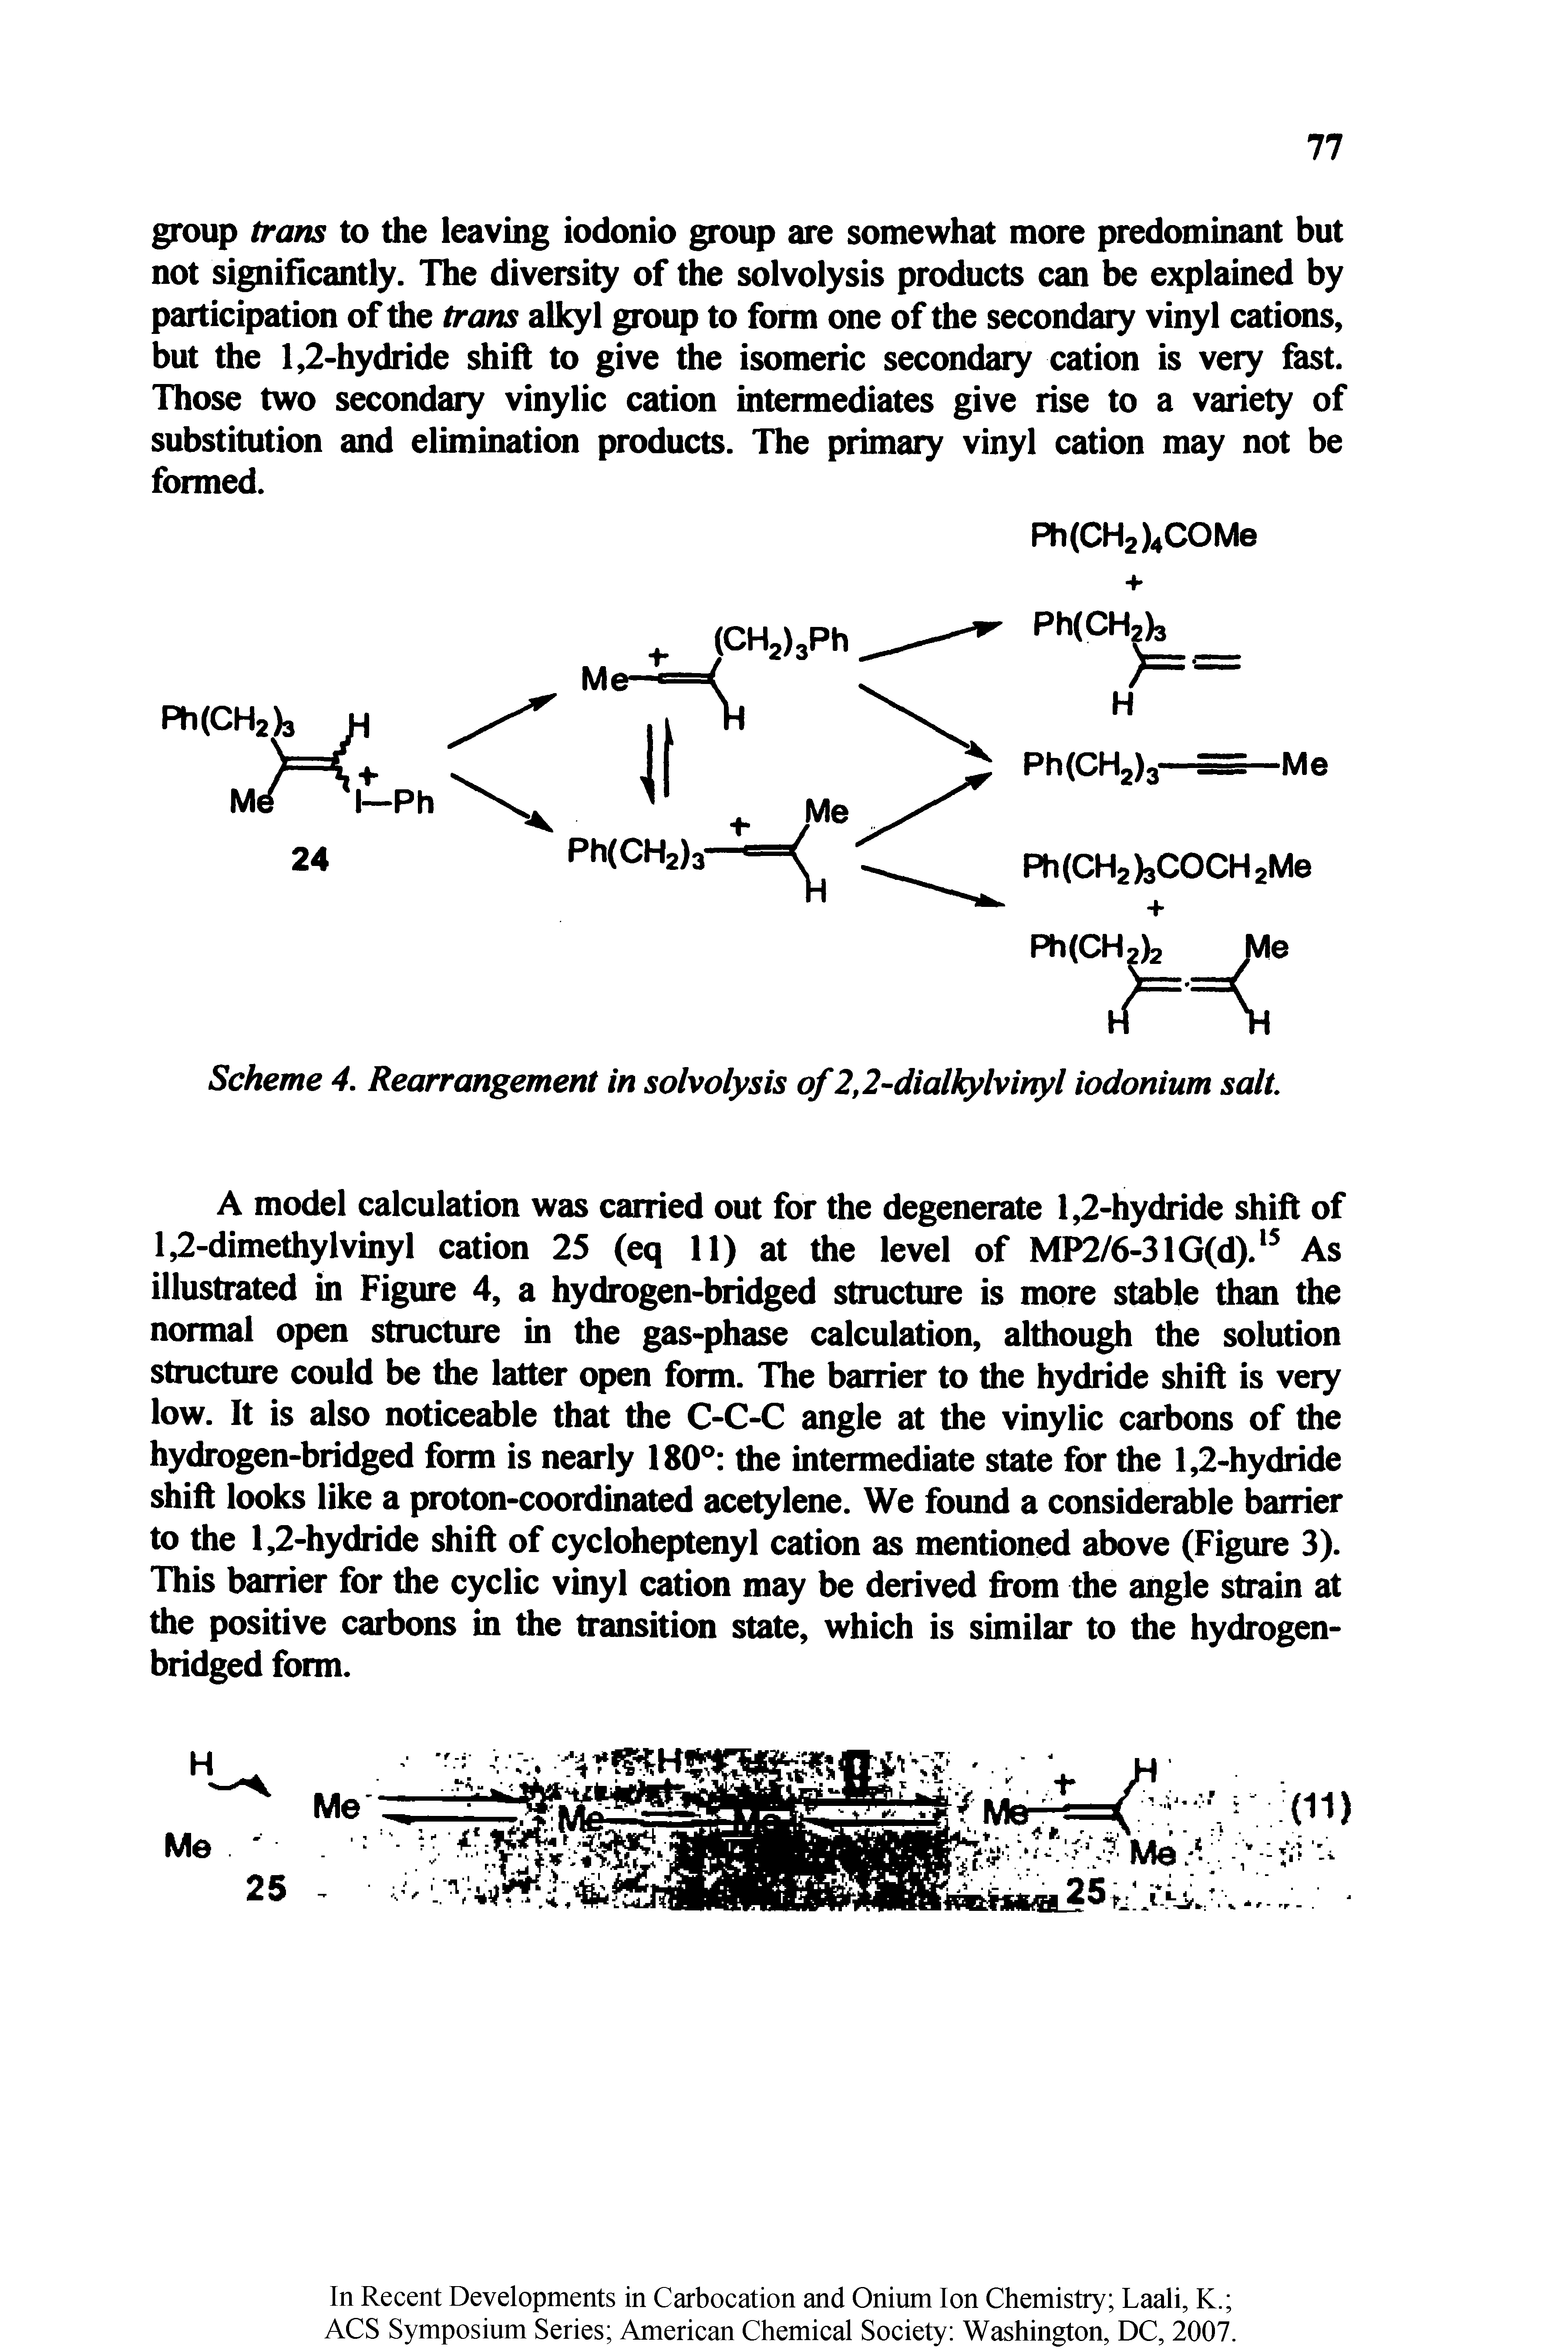 Scheme 4. Rearrangement in solvolysis of 2,2-dialkylvinyl iodonium salt.